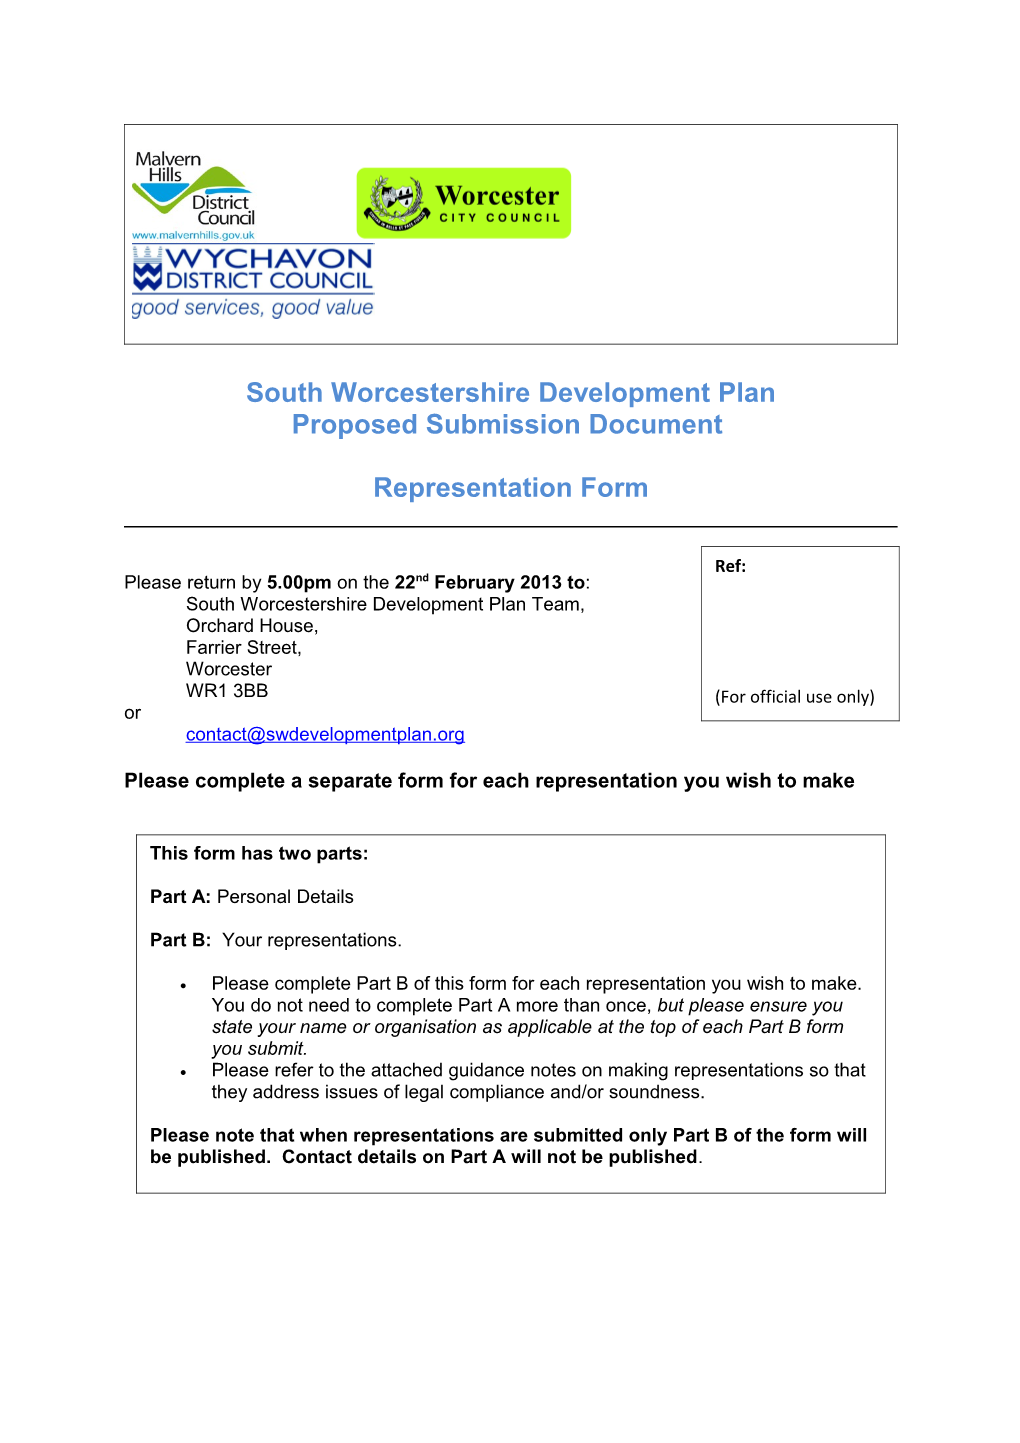 South Worcestershire Development Plan